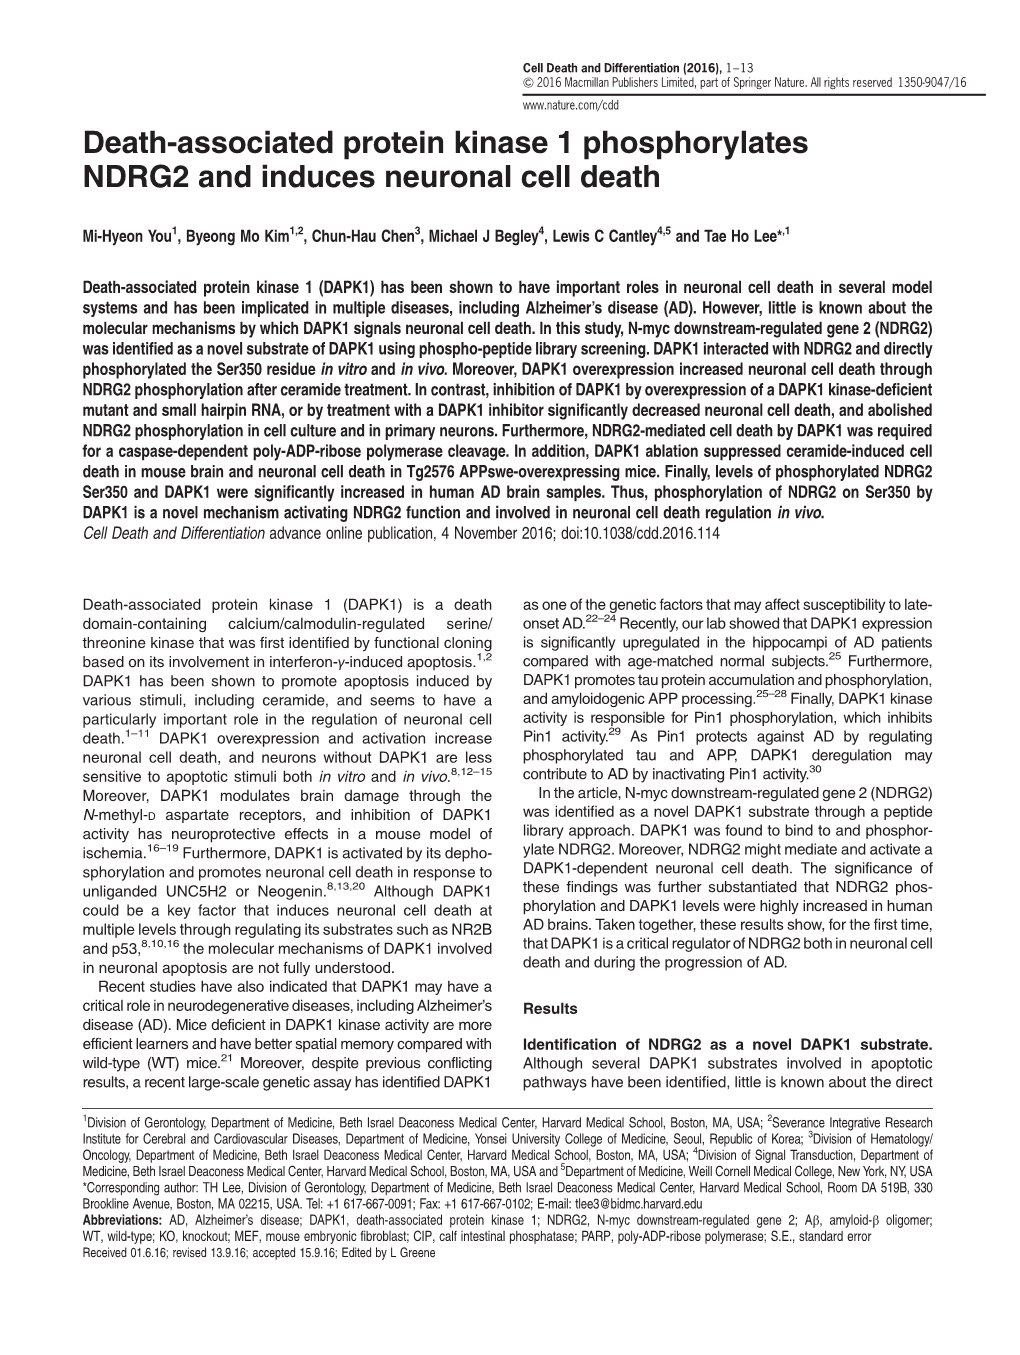 Death-Associated Protein Kinase 1 Phosphorylates NDRG2 and Induces Neuronal Cell Death